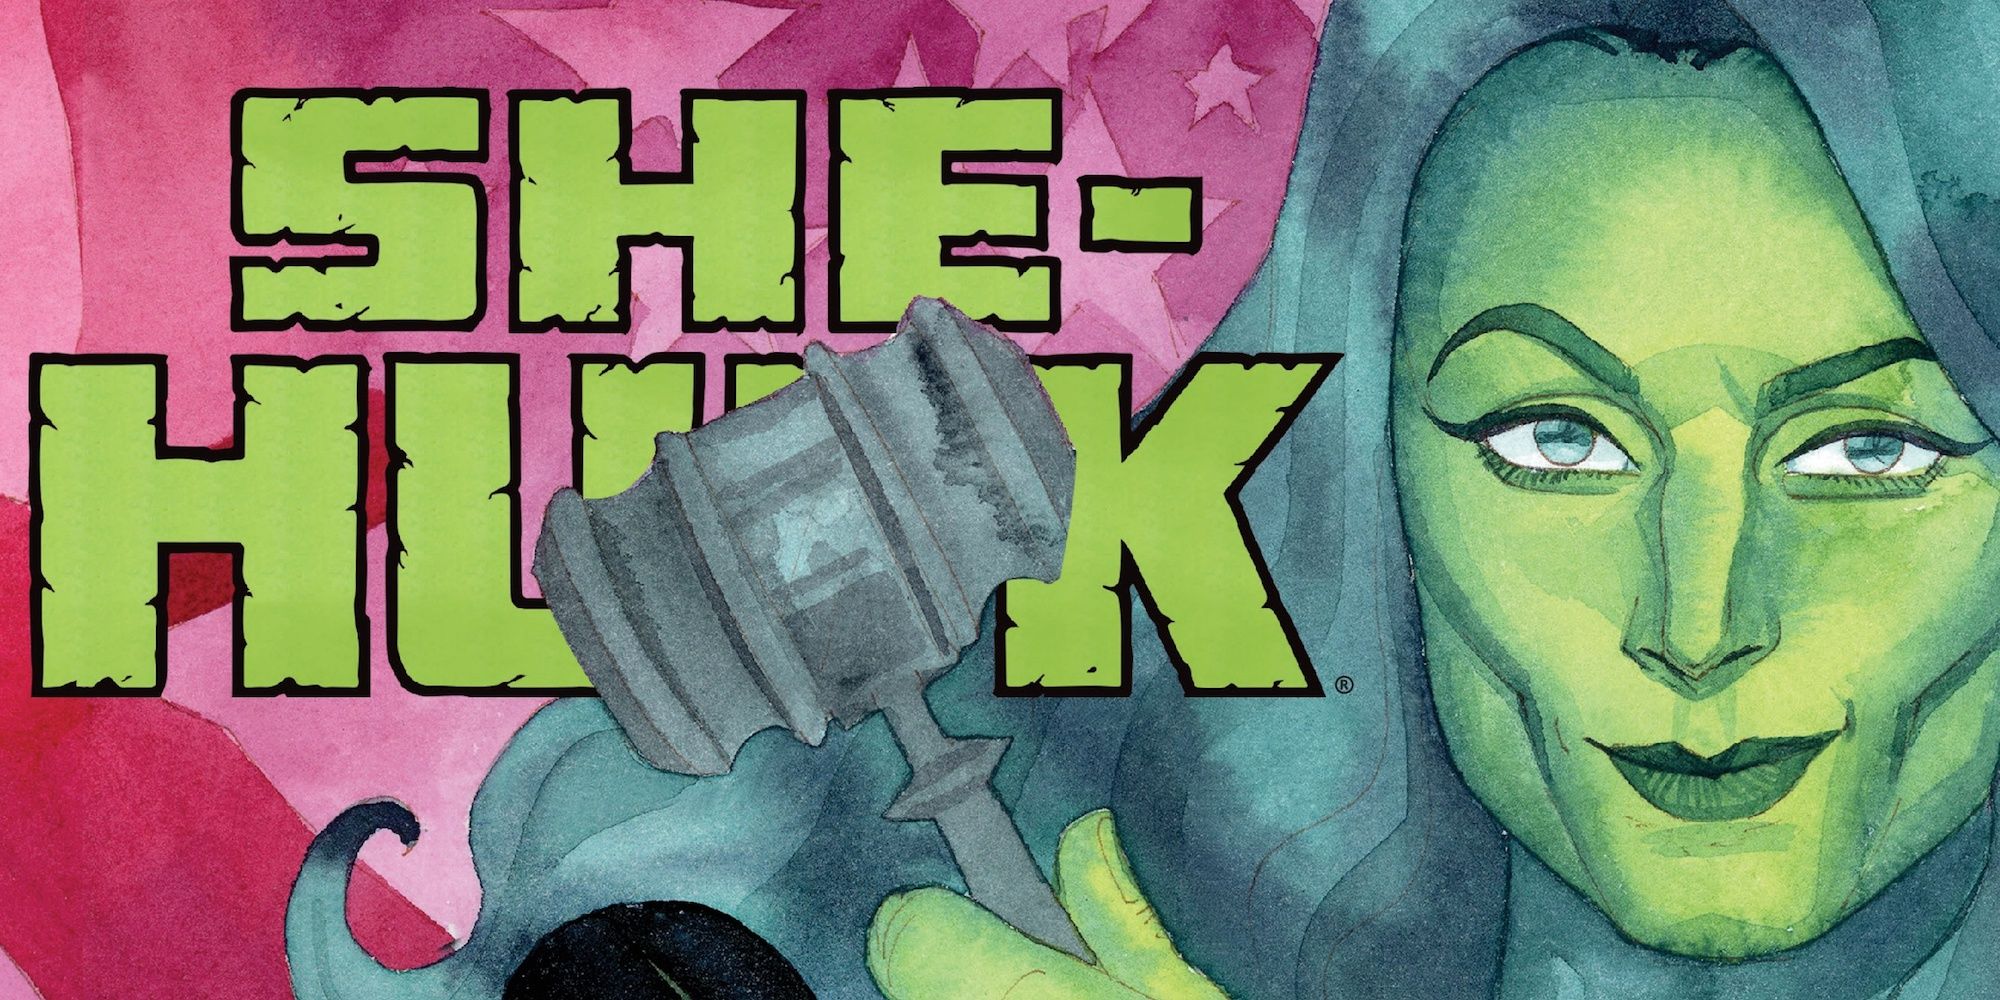 she-hulk-image-cover-art-kevin-wada